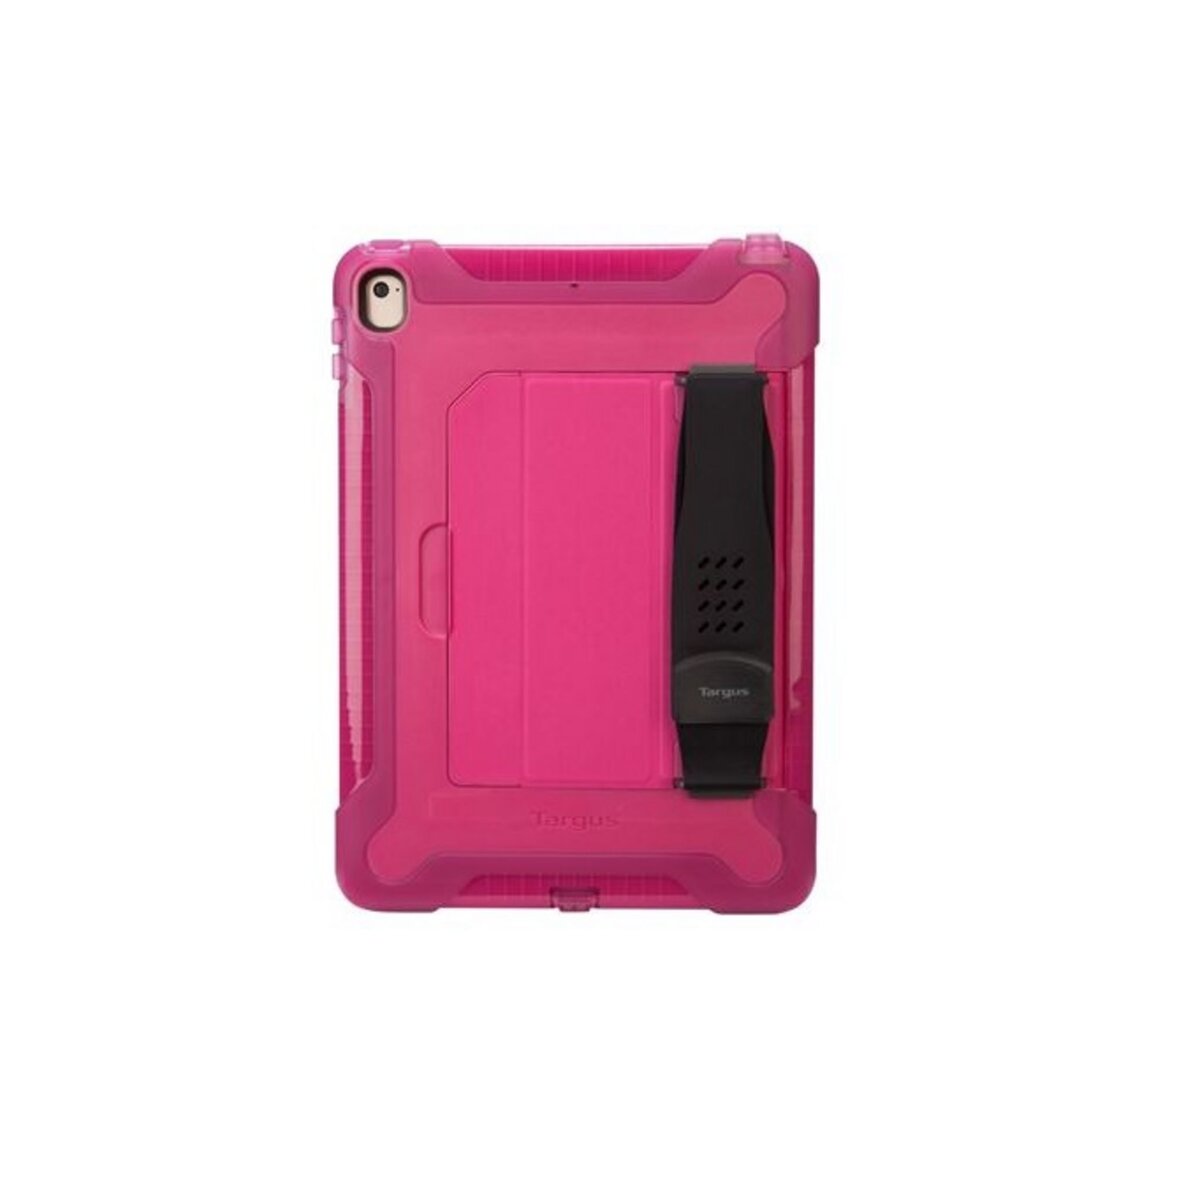 TARGUS Protection tablette SafePort 9.7 pouces - Rose